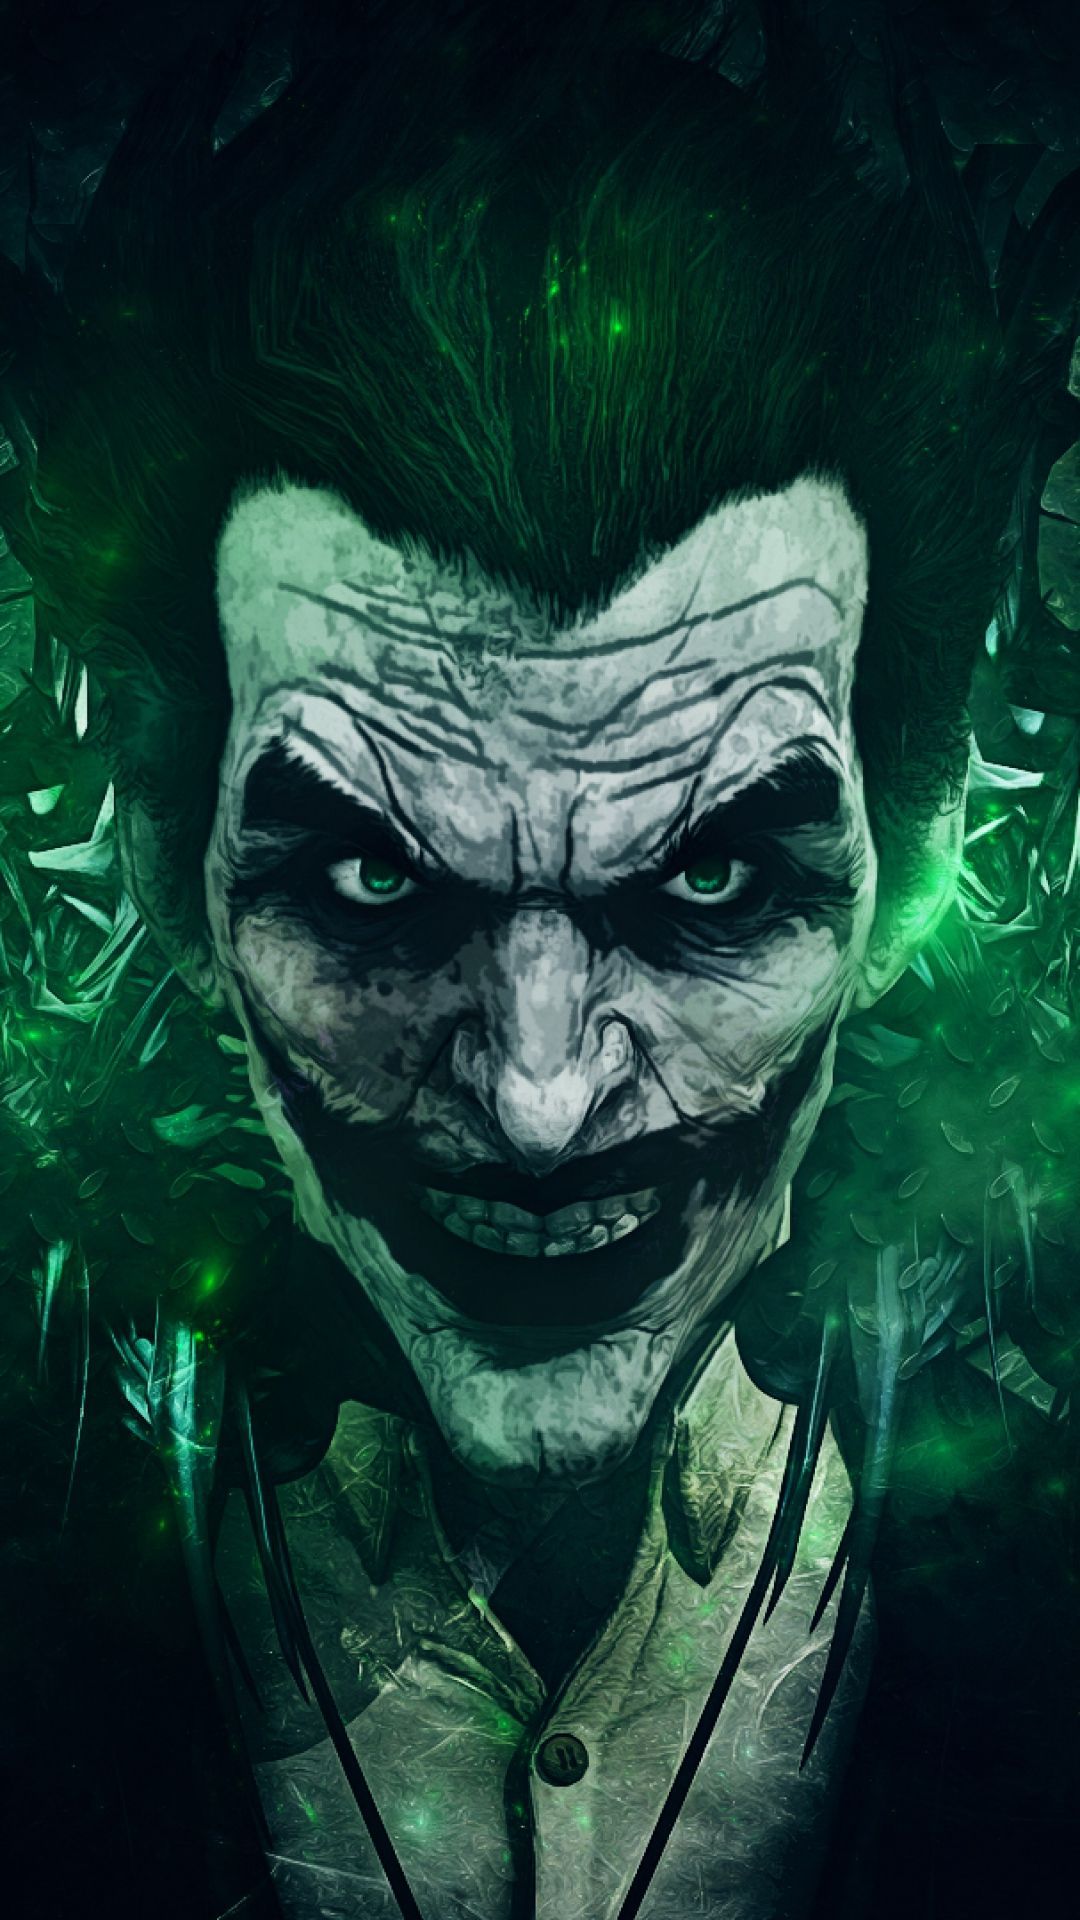 Batman Wallpaper for iPhone #batmanwallpaperforiphone. Joker wallpaper, Joker pics, Batman joker